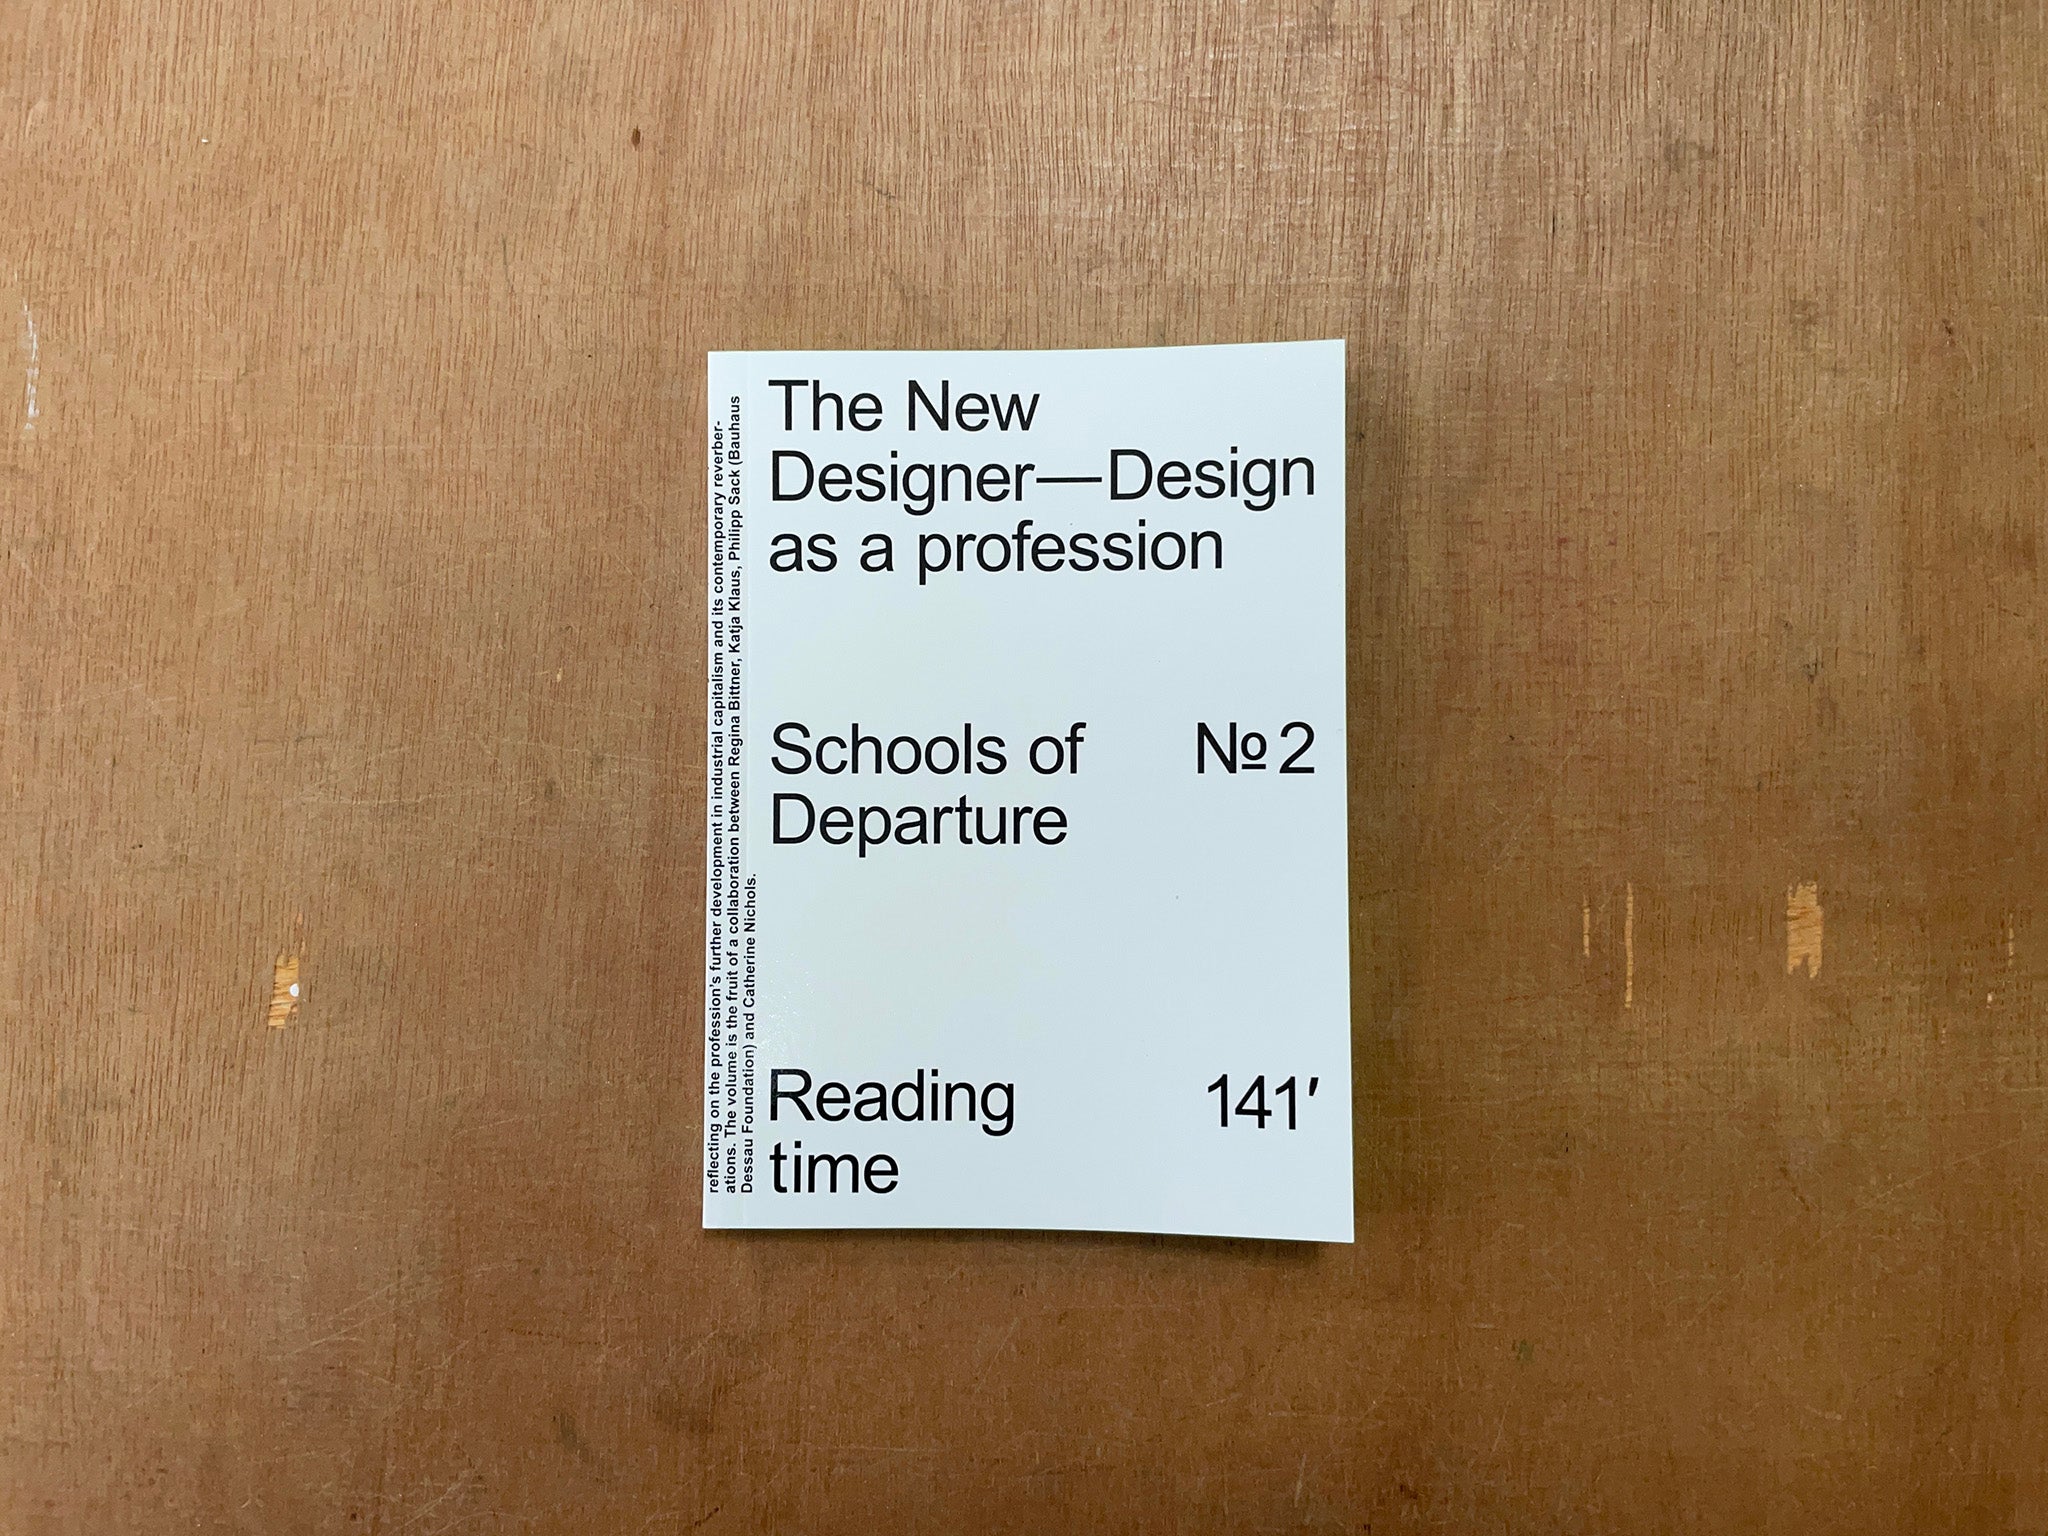 SCHOOLS OF DEPARTURE NO. 2: THE NEW DESIGNER – DESIGN AS A PROFESSION